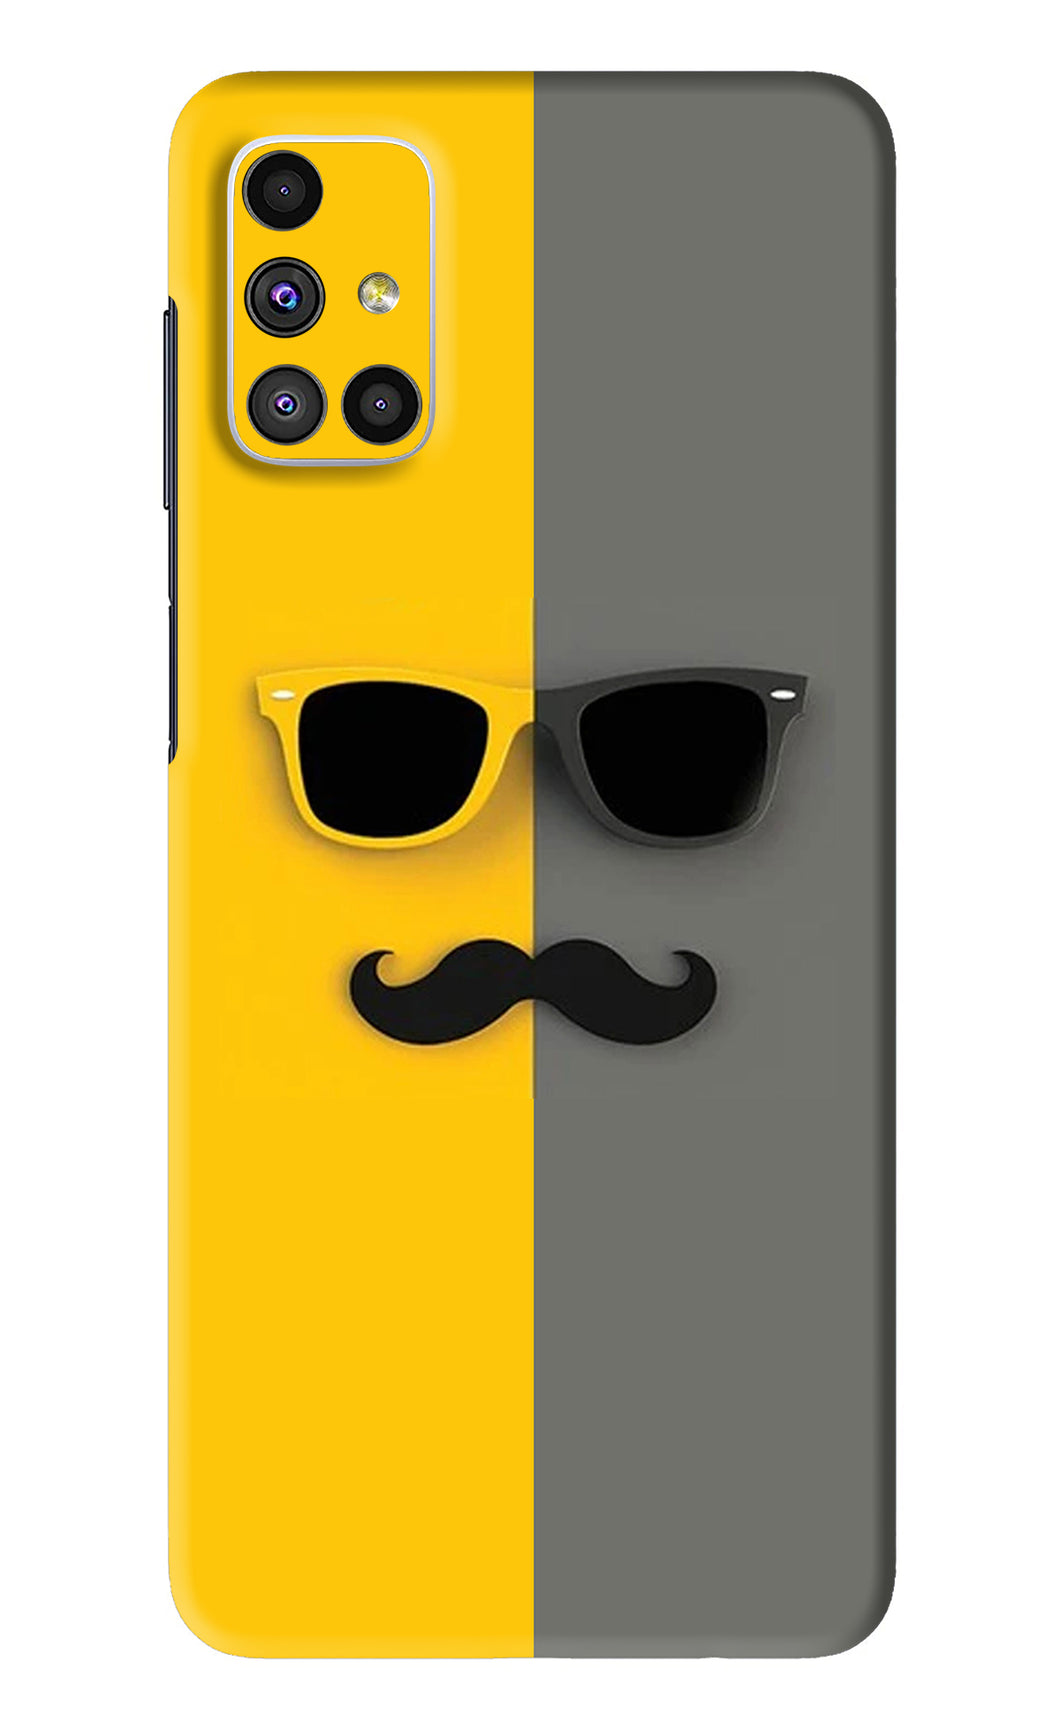 Sunglasses with Mustache Samsung Galaxy M51 Back Skin Wrap